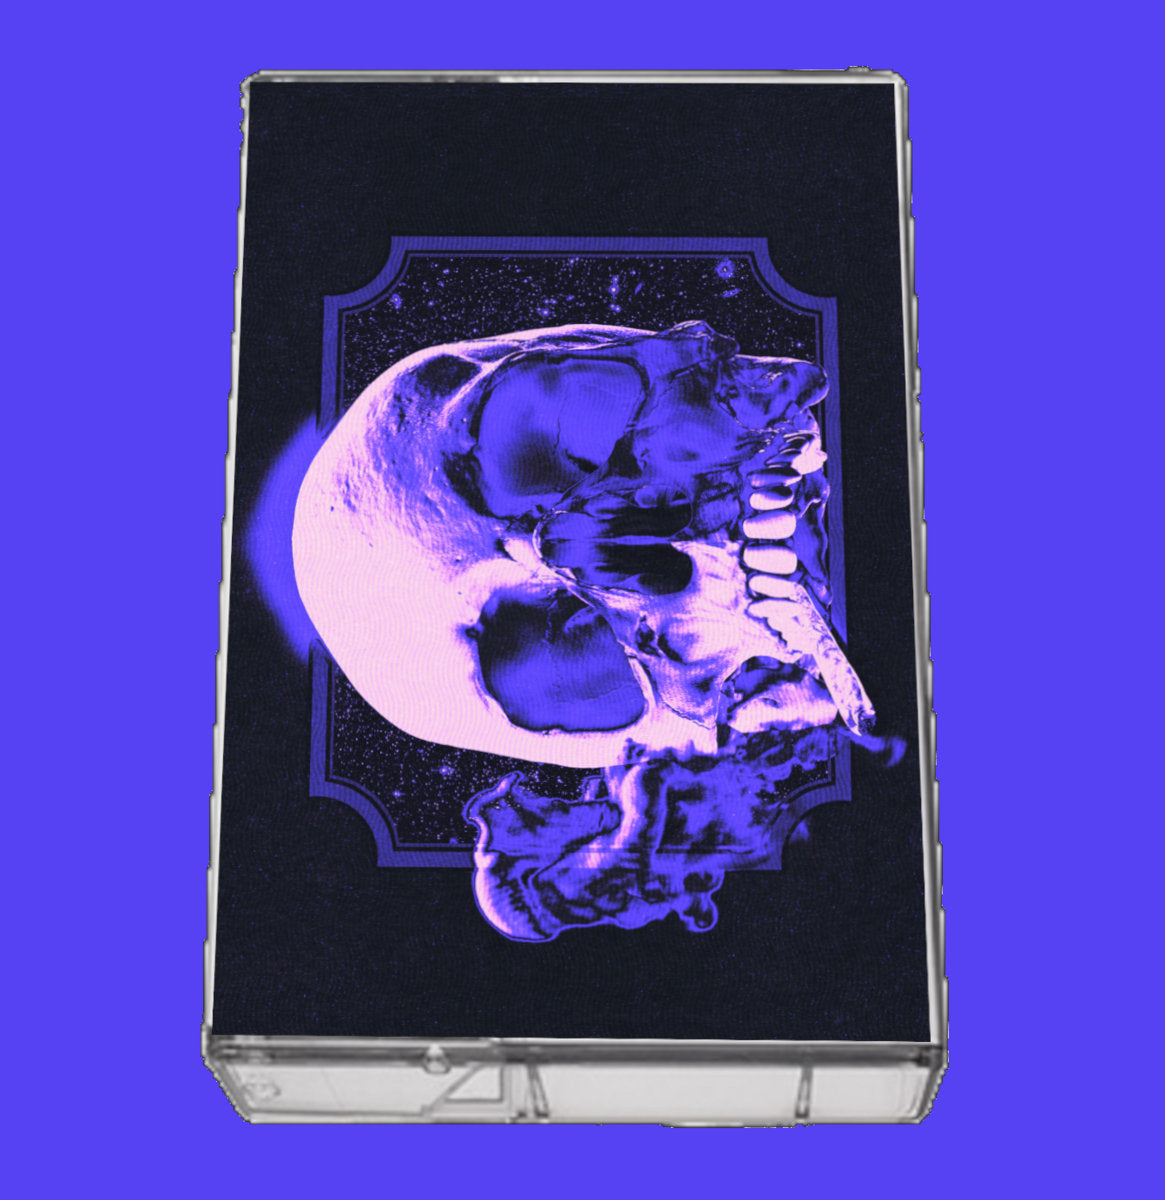 Tigers On Opium - "503.420.6669.Vol.2" Cassette